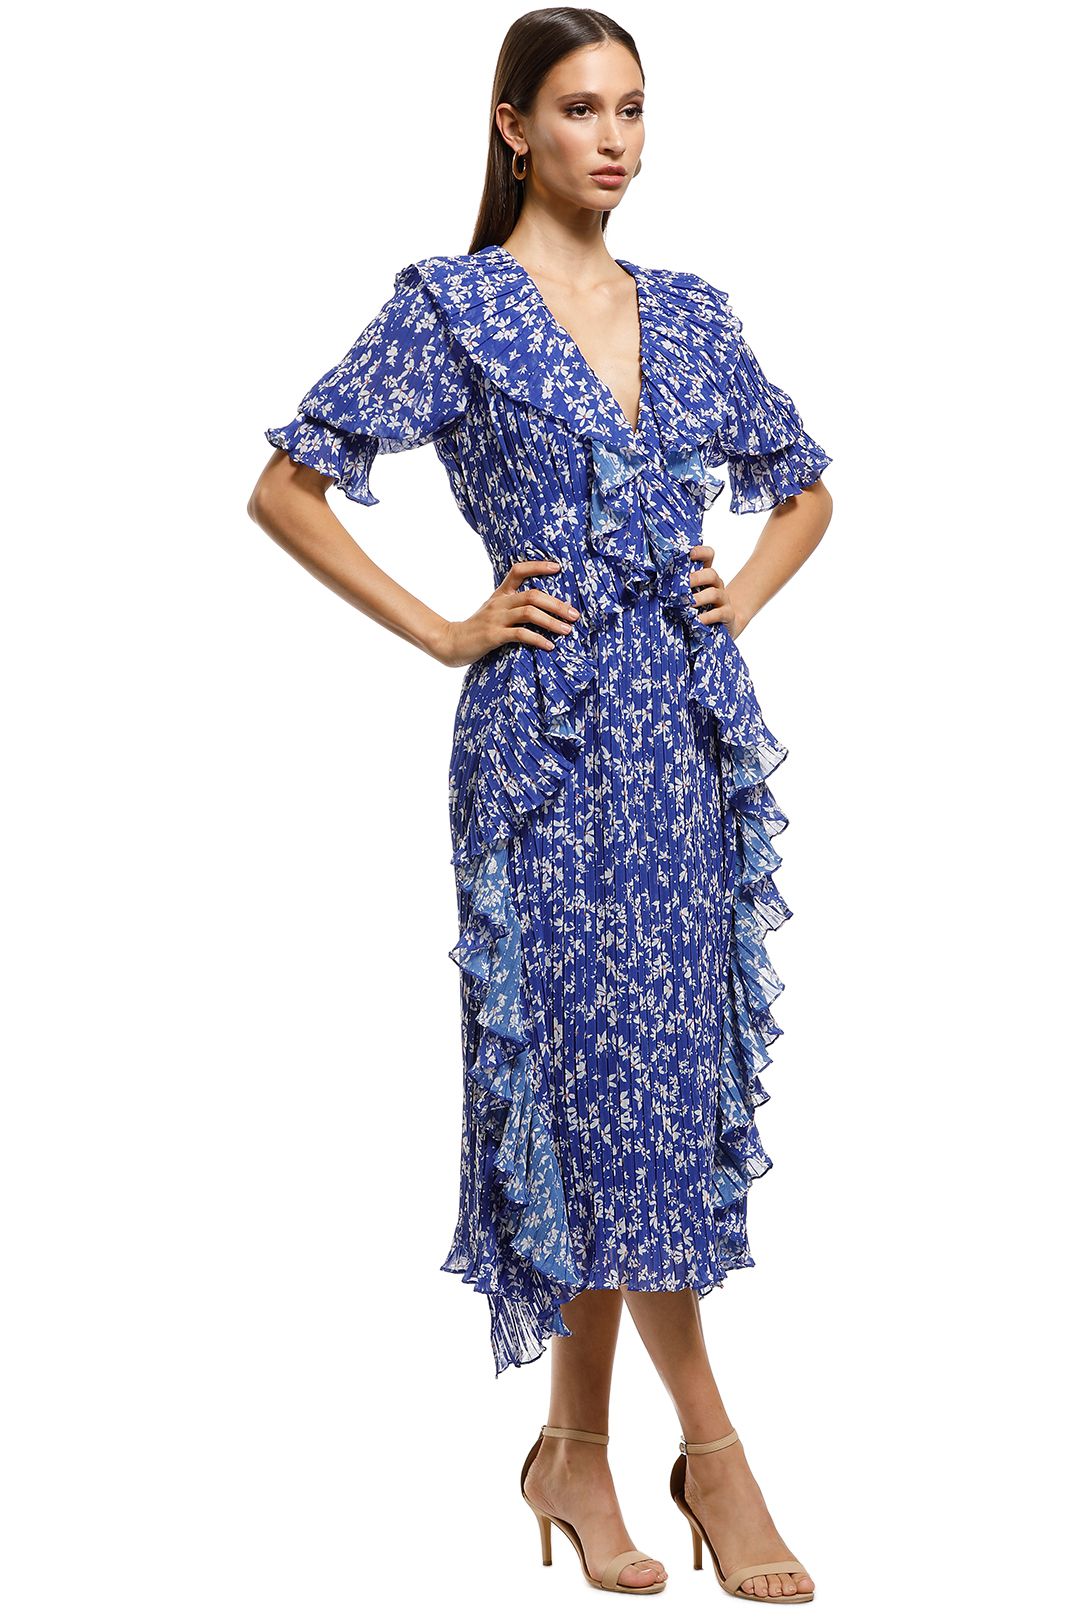 Talulah - Mediterranean Minx Midi Dress - Blue Floral - Side